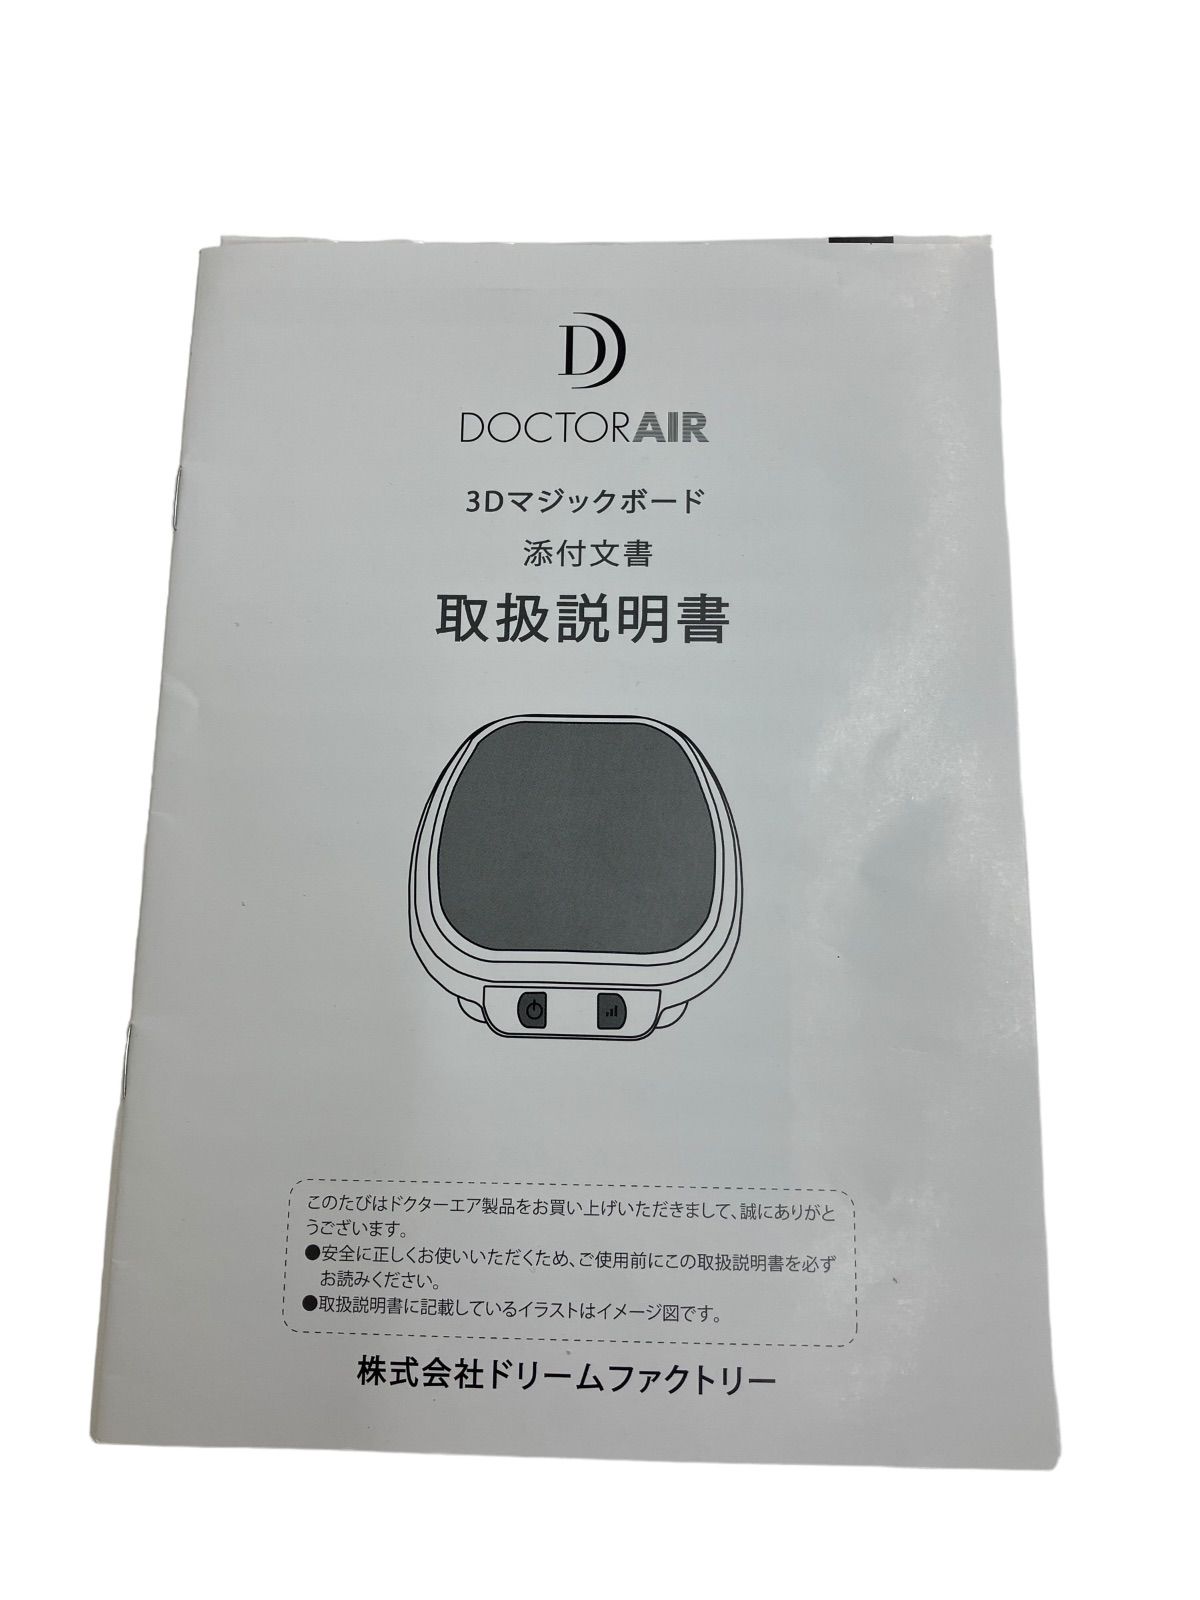 DoctorAir 3Dマジックボード MF-002 ☆動作品☆ P-00001 - メルカリ